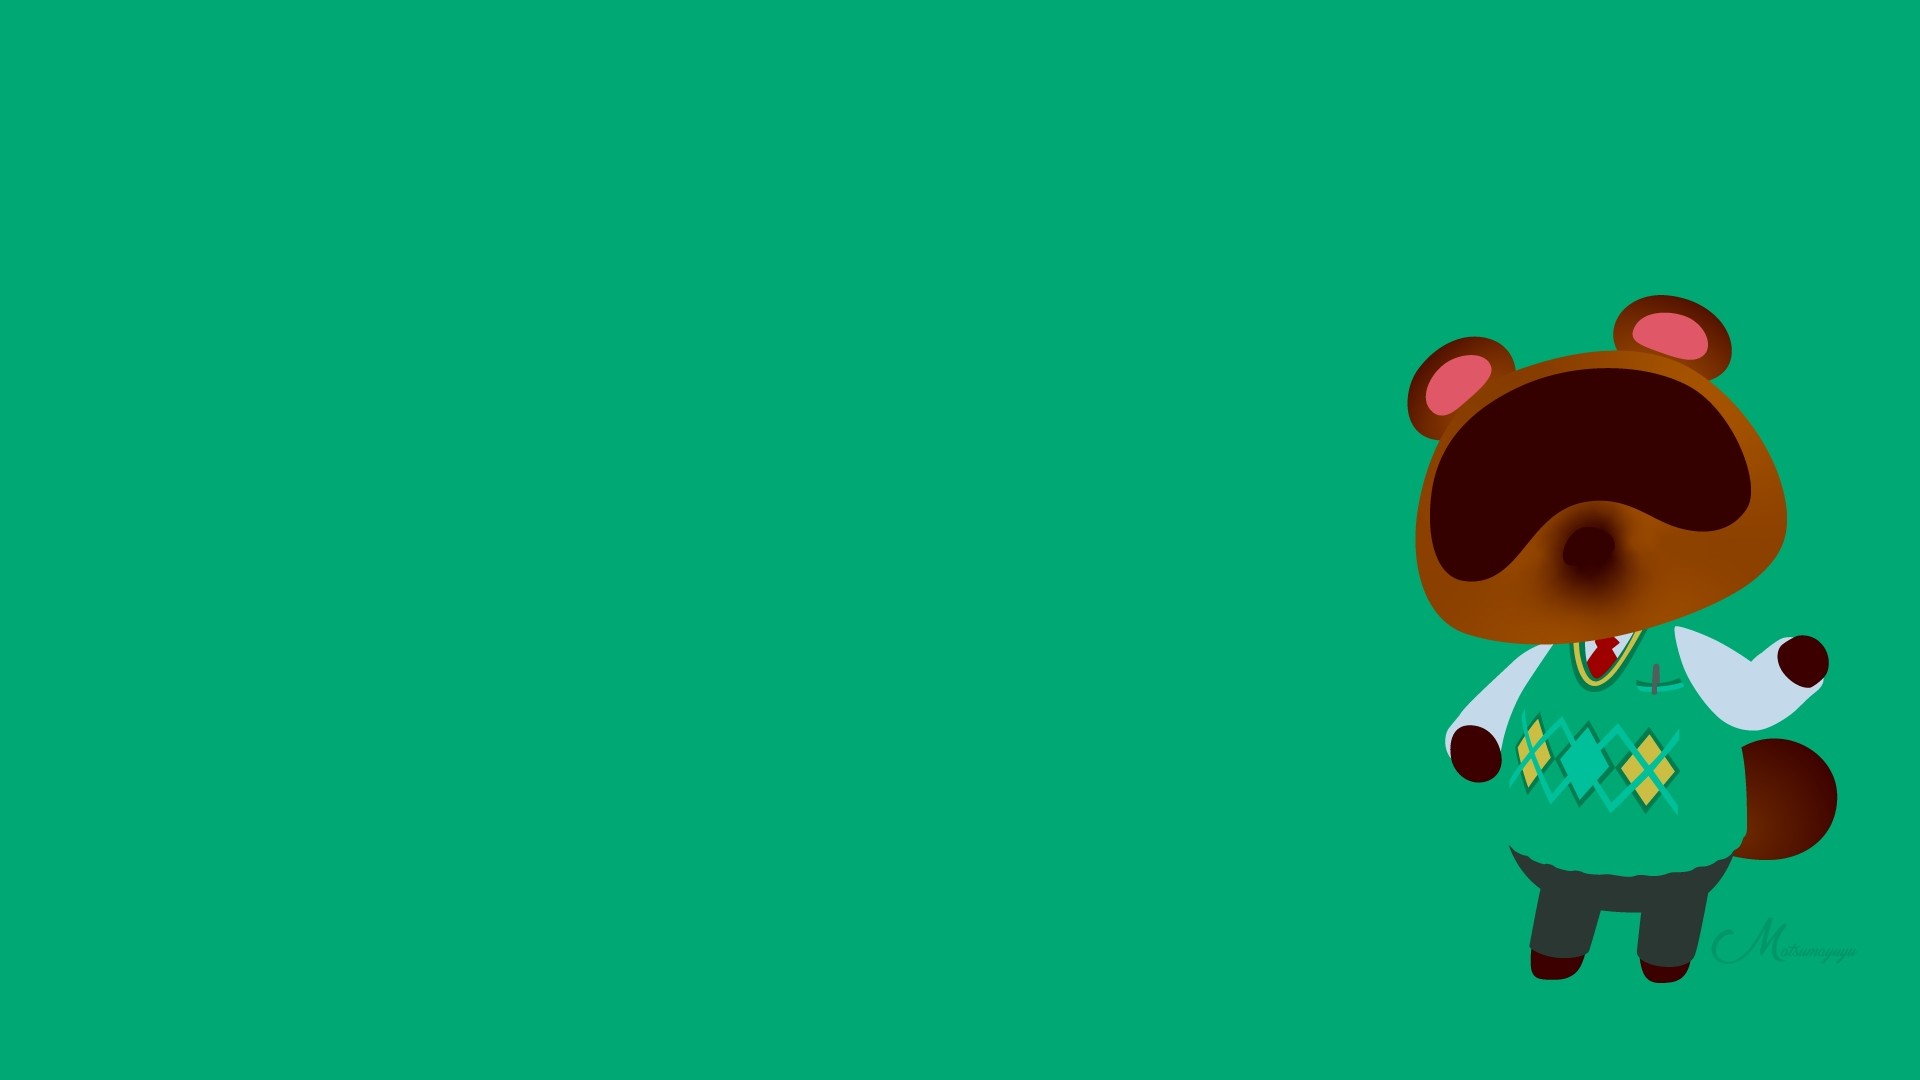 Minimalist Animal Crossing Phone Wallpapers